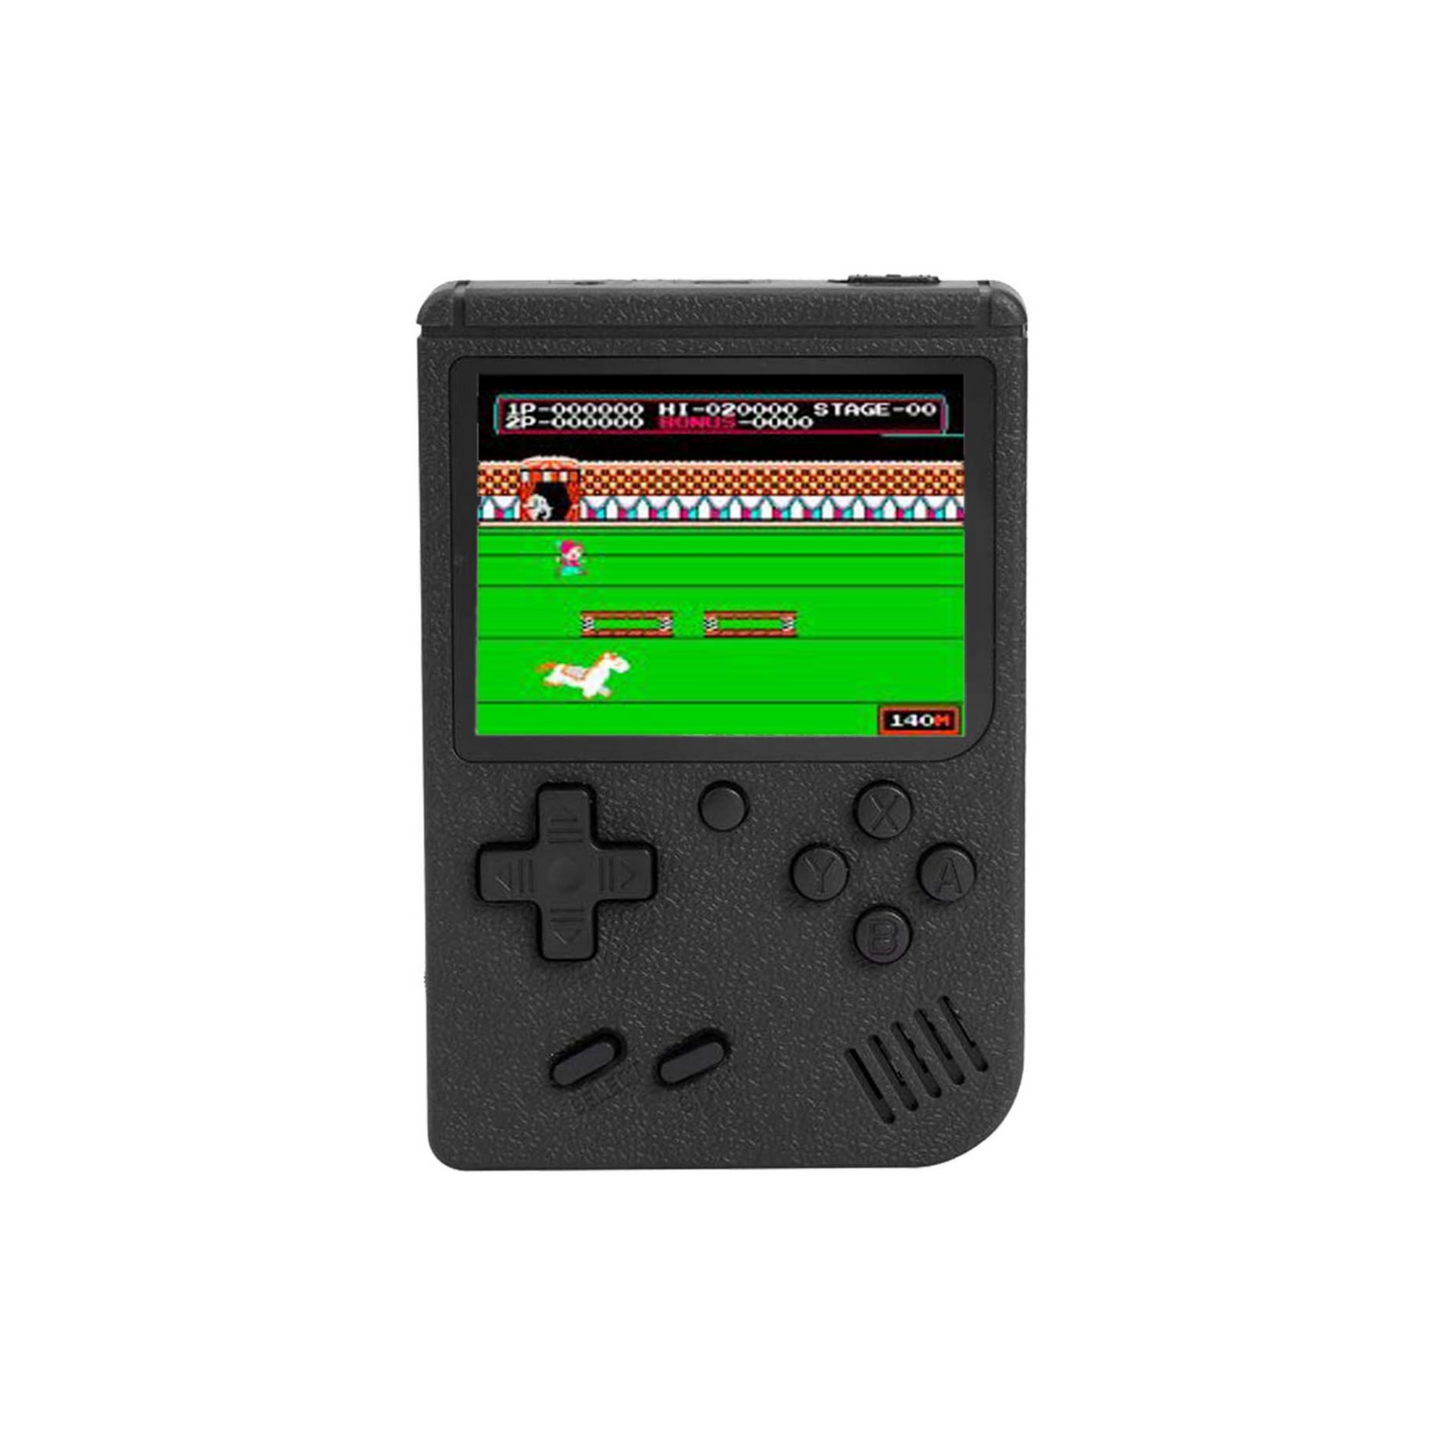 Retro Handheld Game Console - 400 Classic Games, 3.0-Inch Screen (Black)